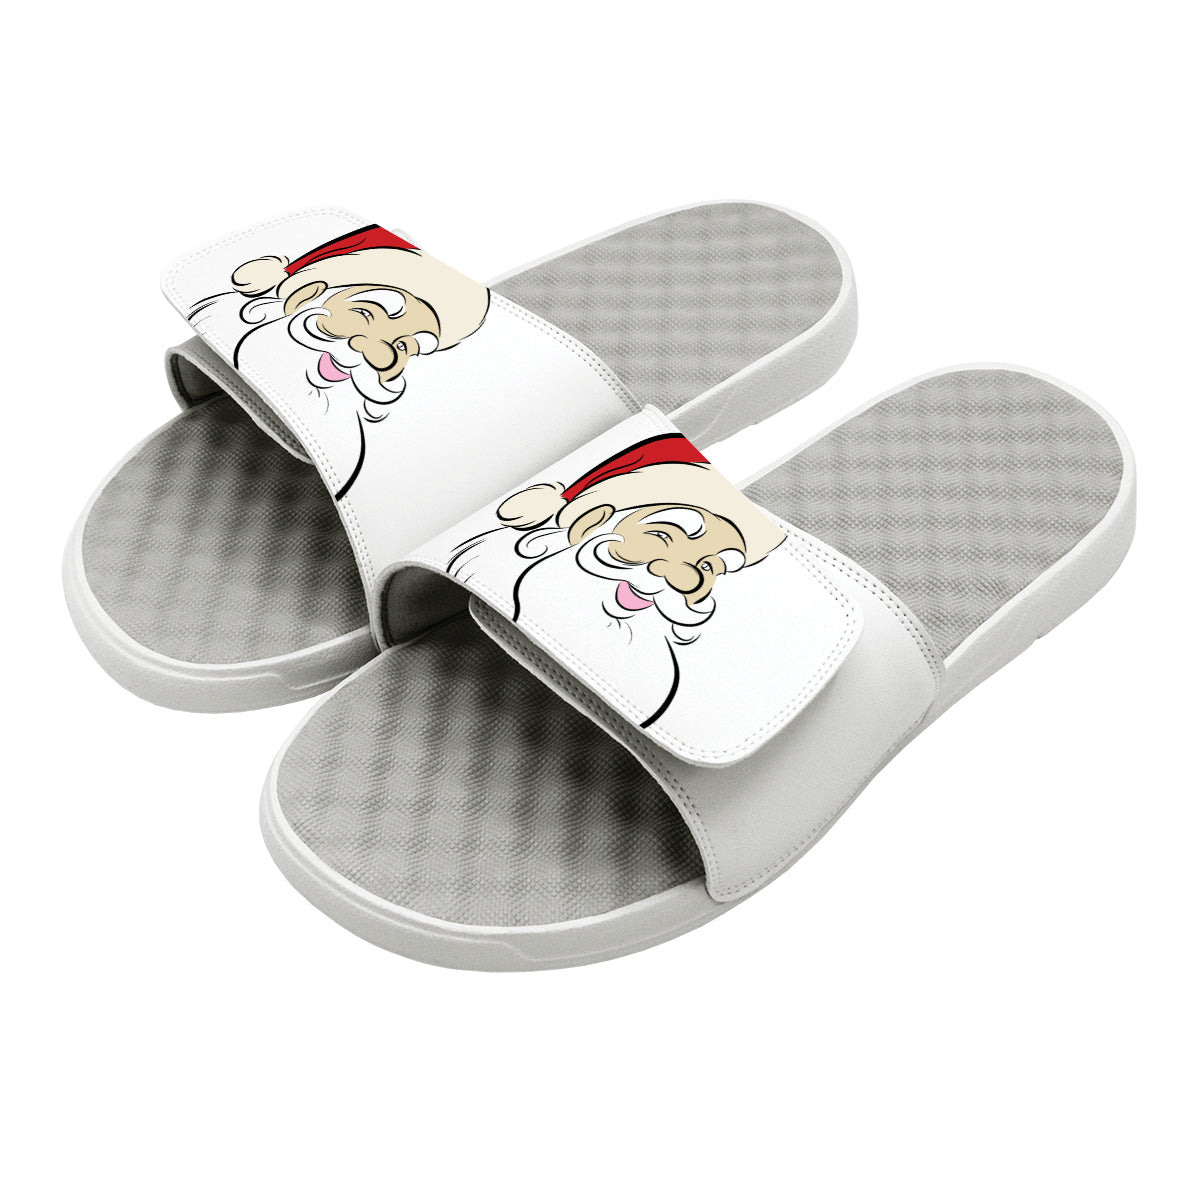 Santa Claus Great White Slides